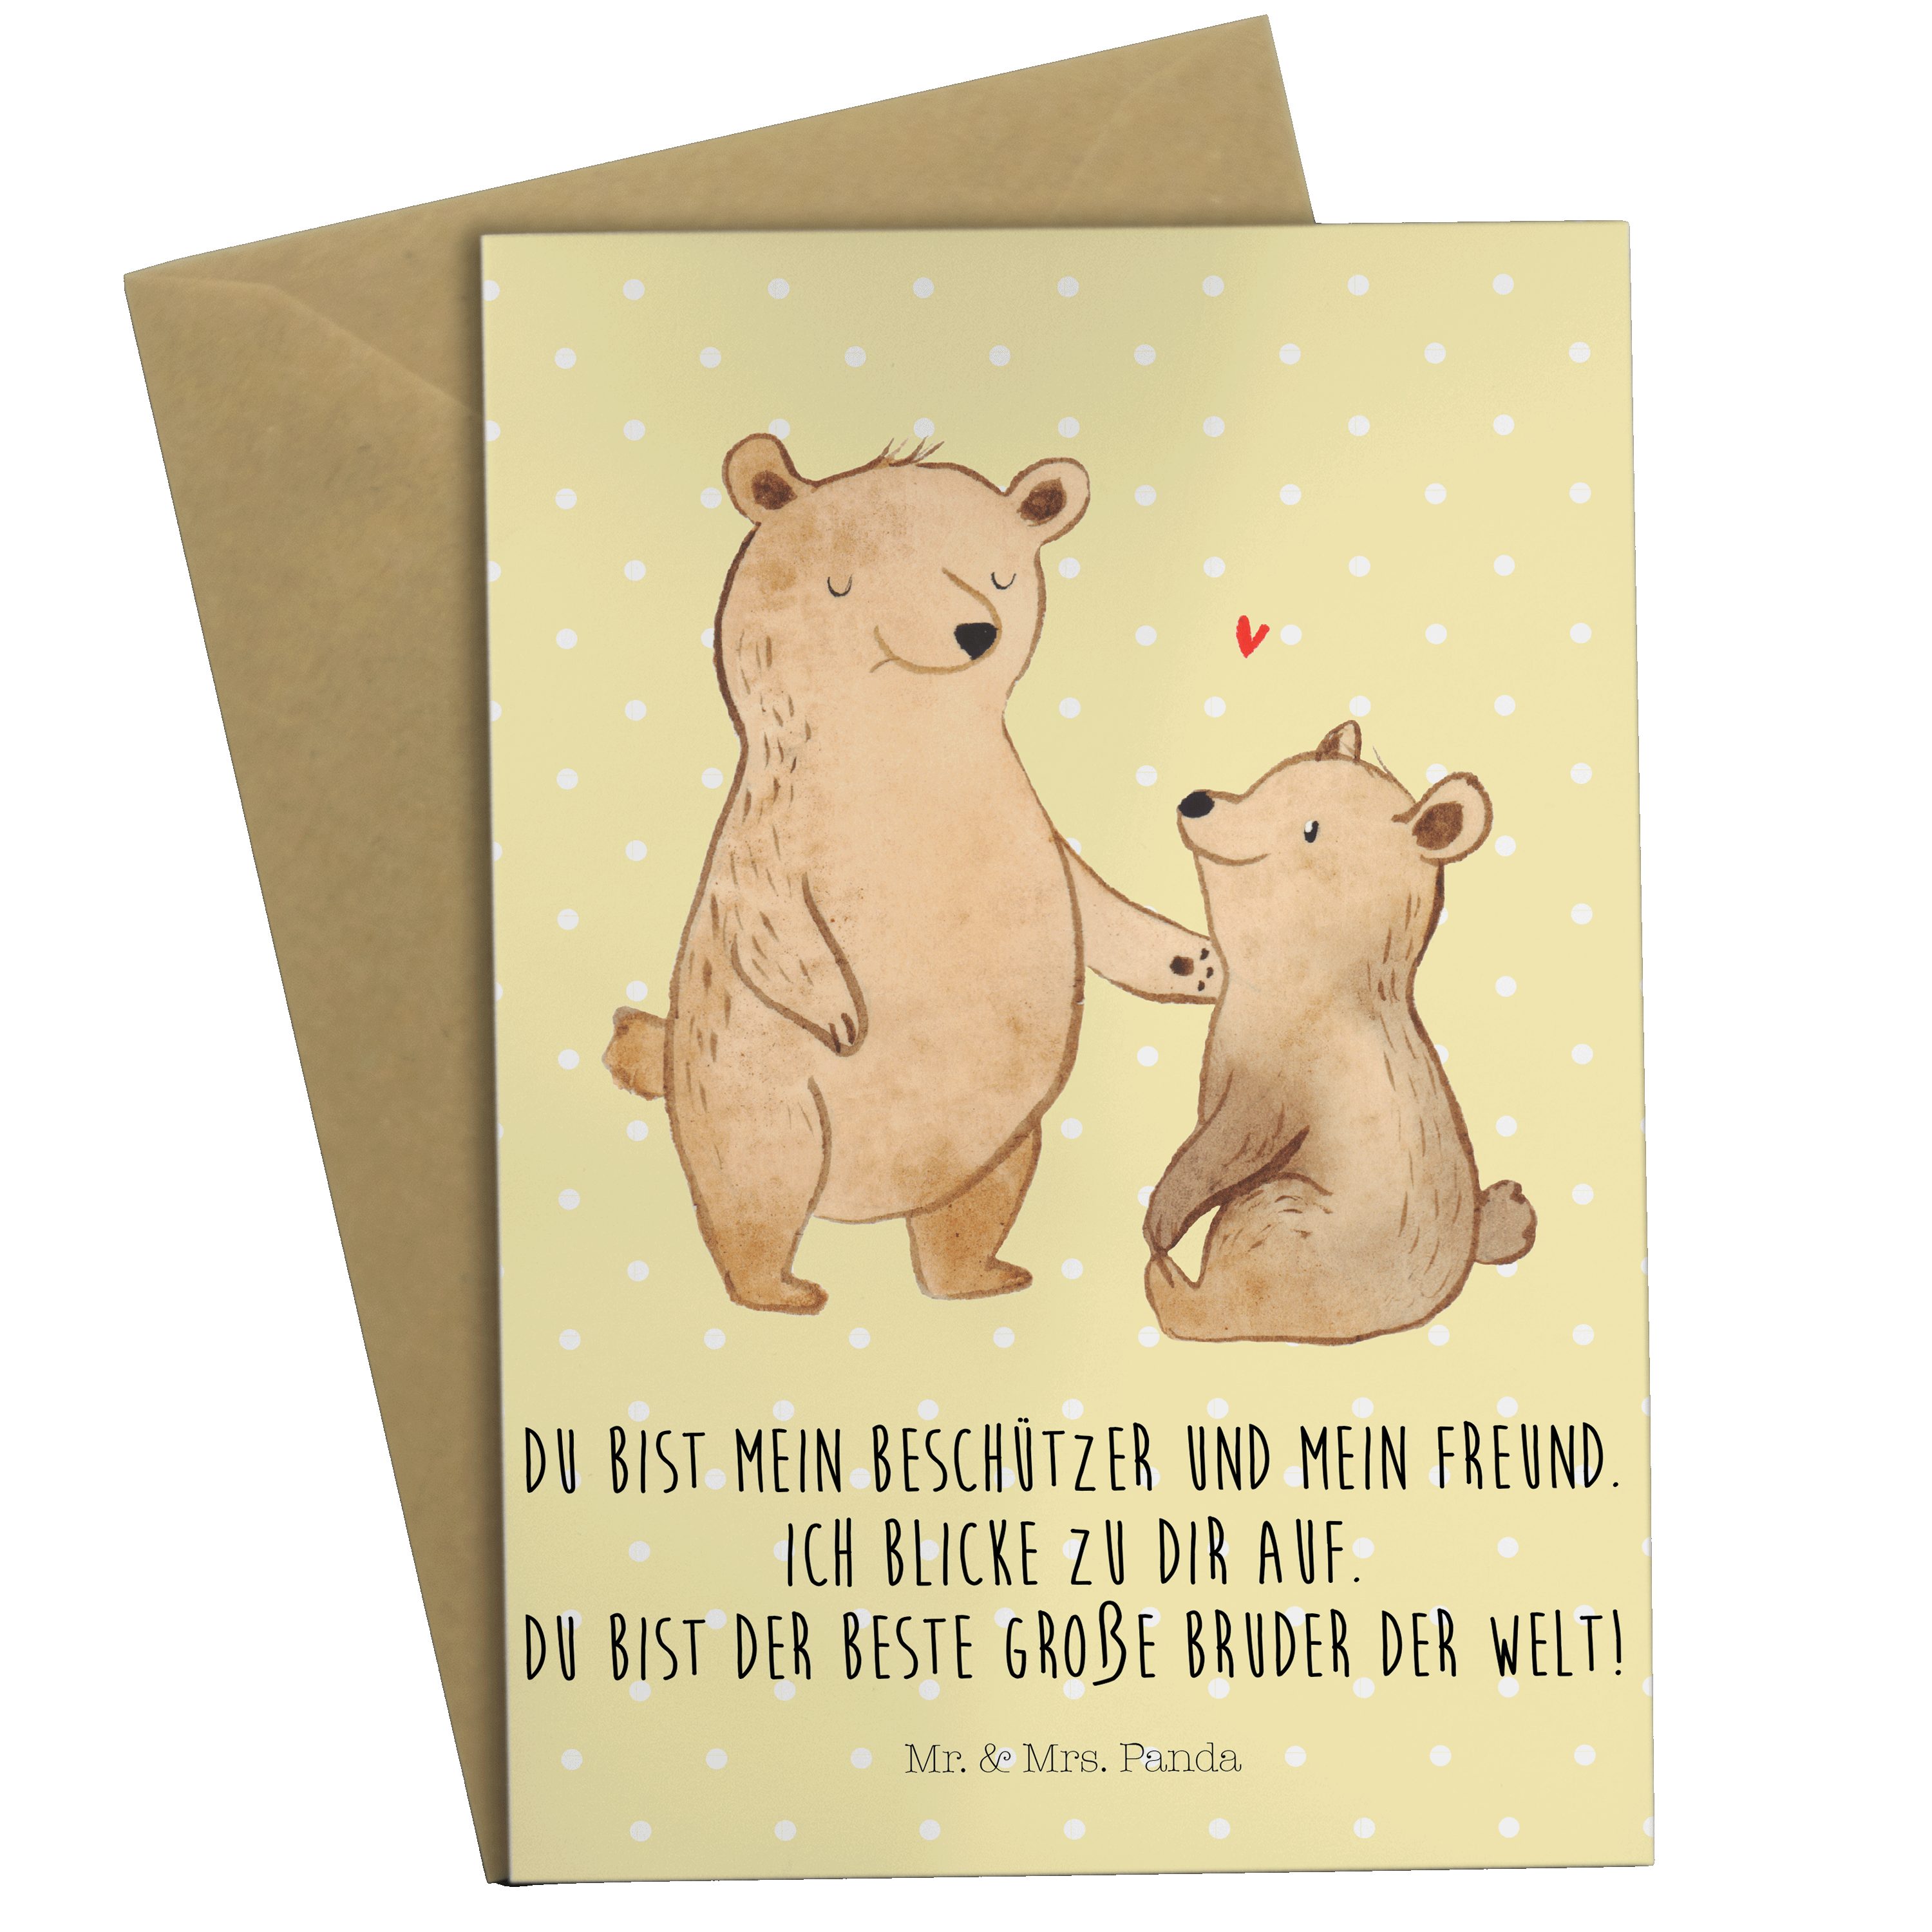 Pastell Geschwister, - Geschenk, & Gelb Bär Großer Bruder Bären, Grußkarte Mr. - Hoch Panda Mrs.